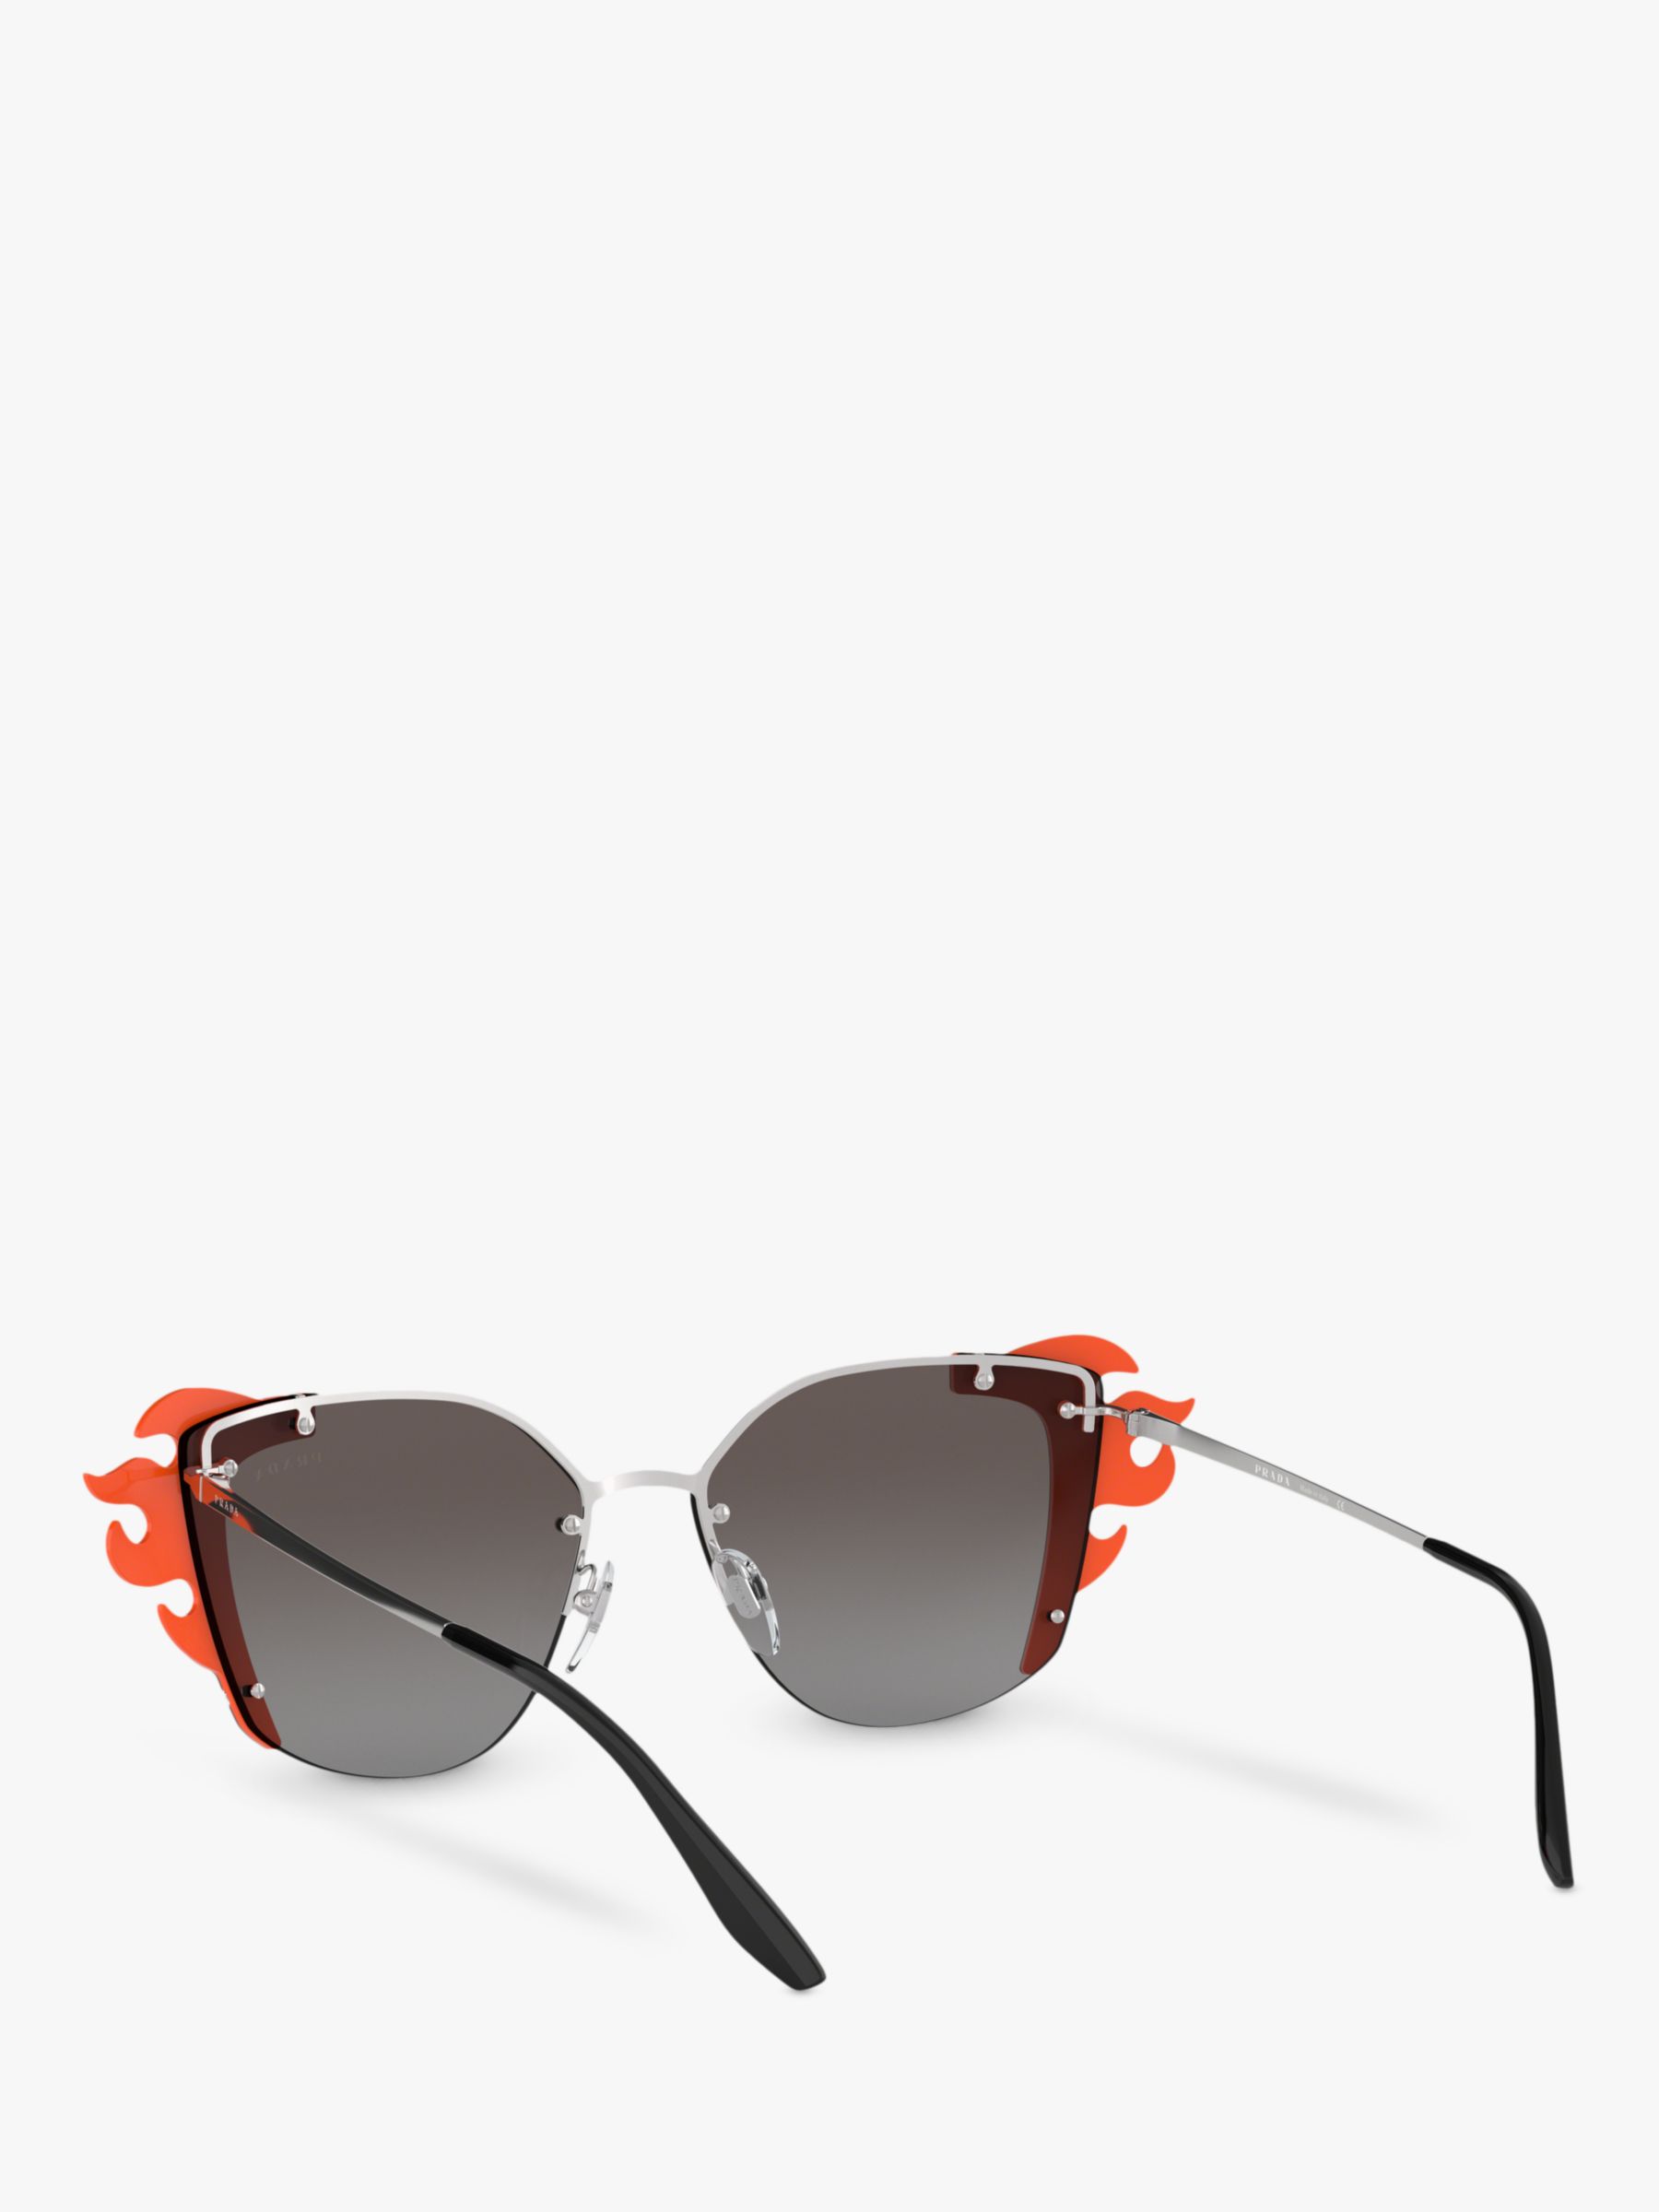 Prada PR 59VS Women's Square Sunglasses, Silver/Grey